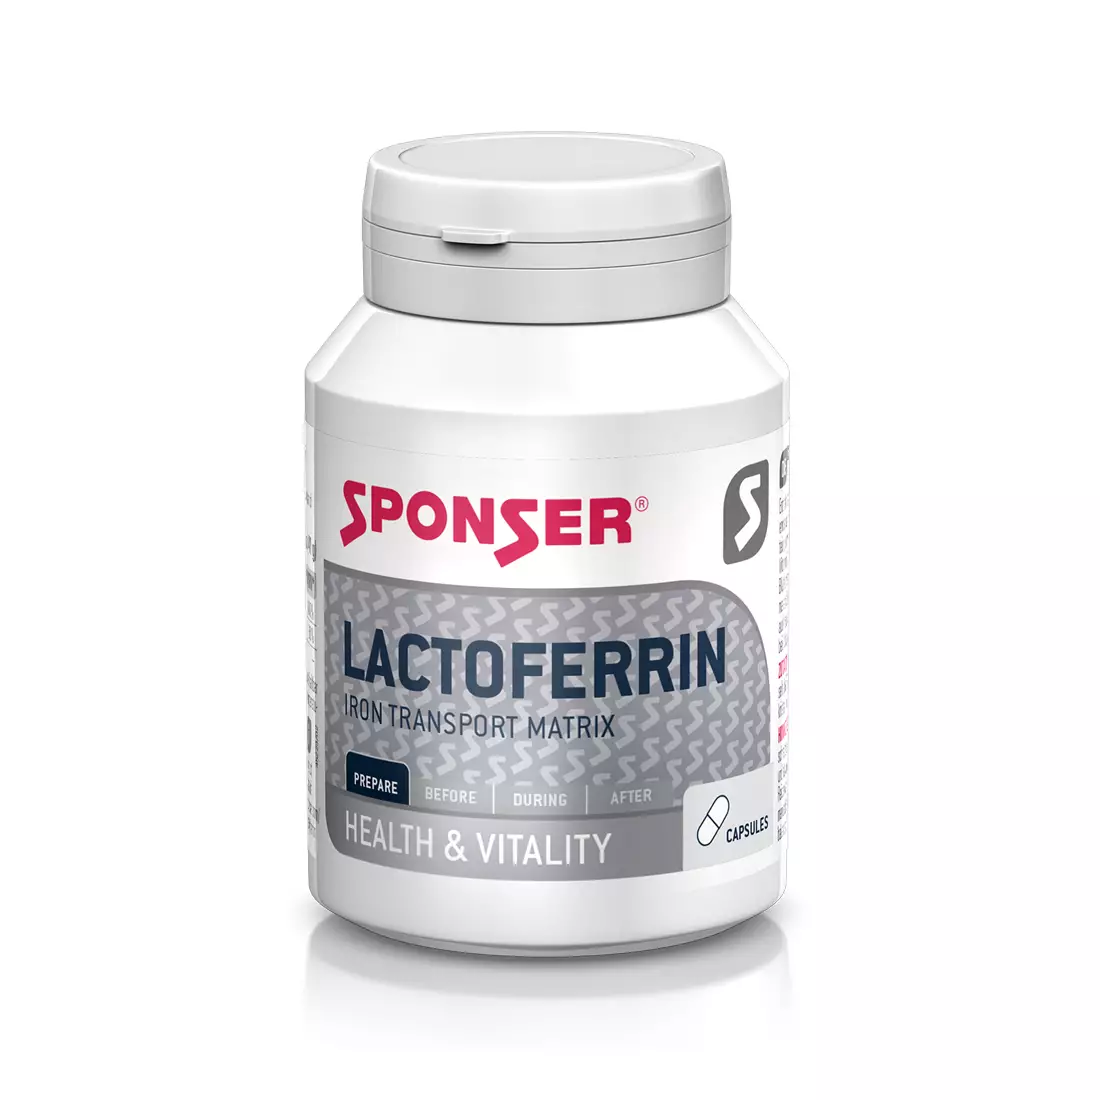 Iron supplement SPONSER LACTOFERRIN IRON TRANSPORT MATRIX 90 tablets